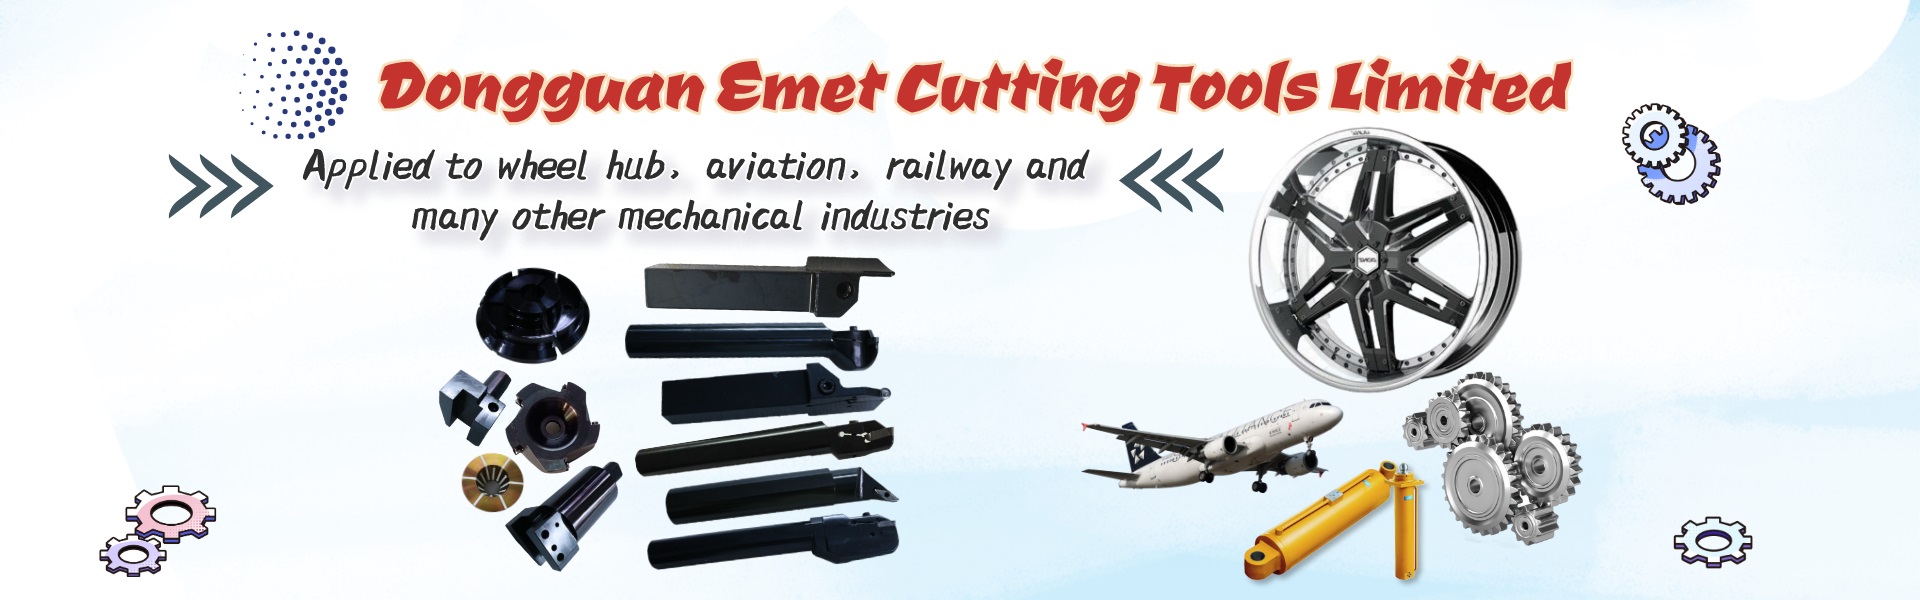 Dongguan Emet Cutting Tools Limited